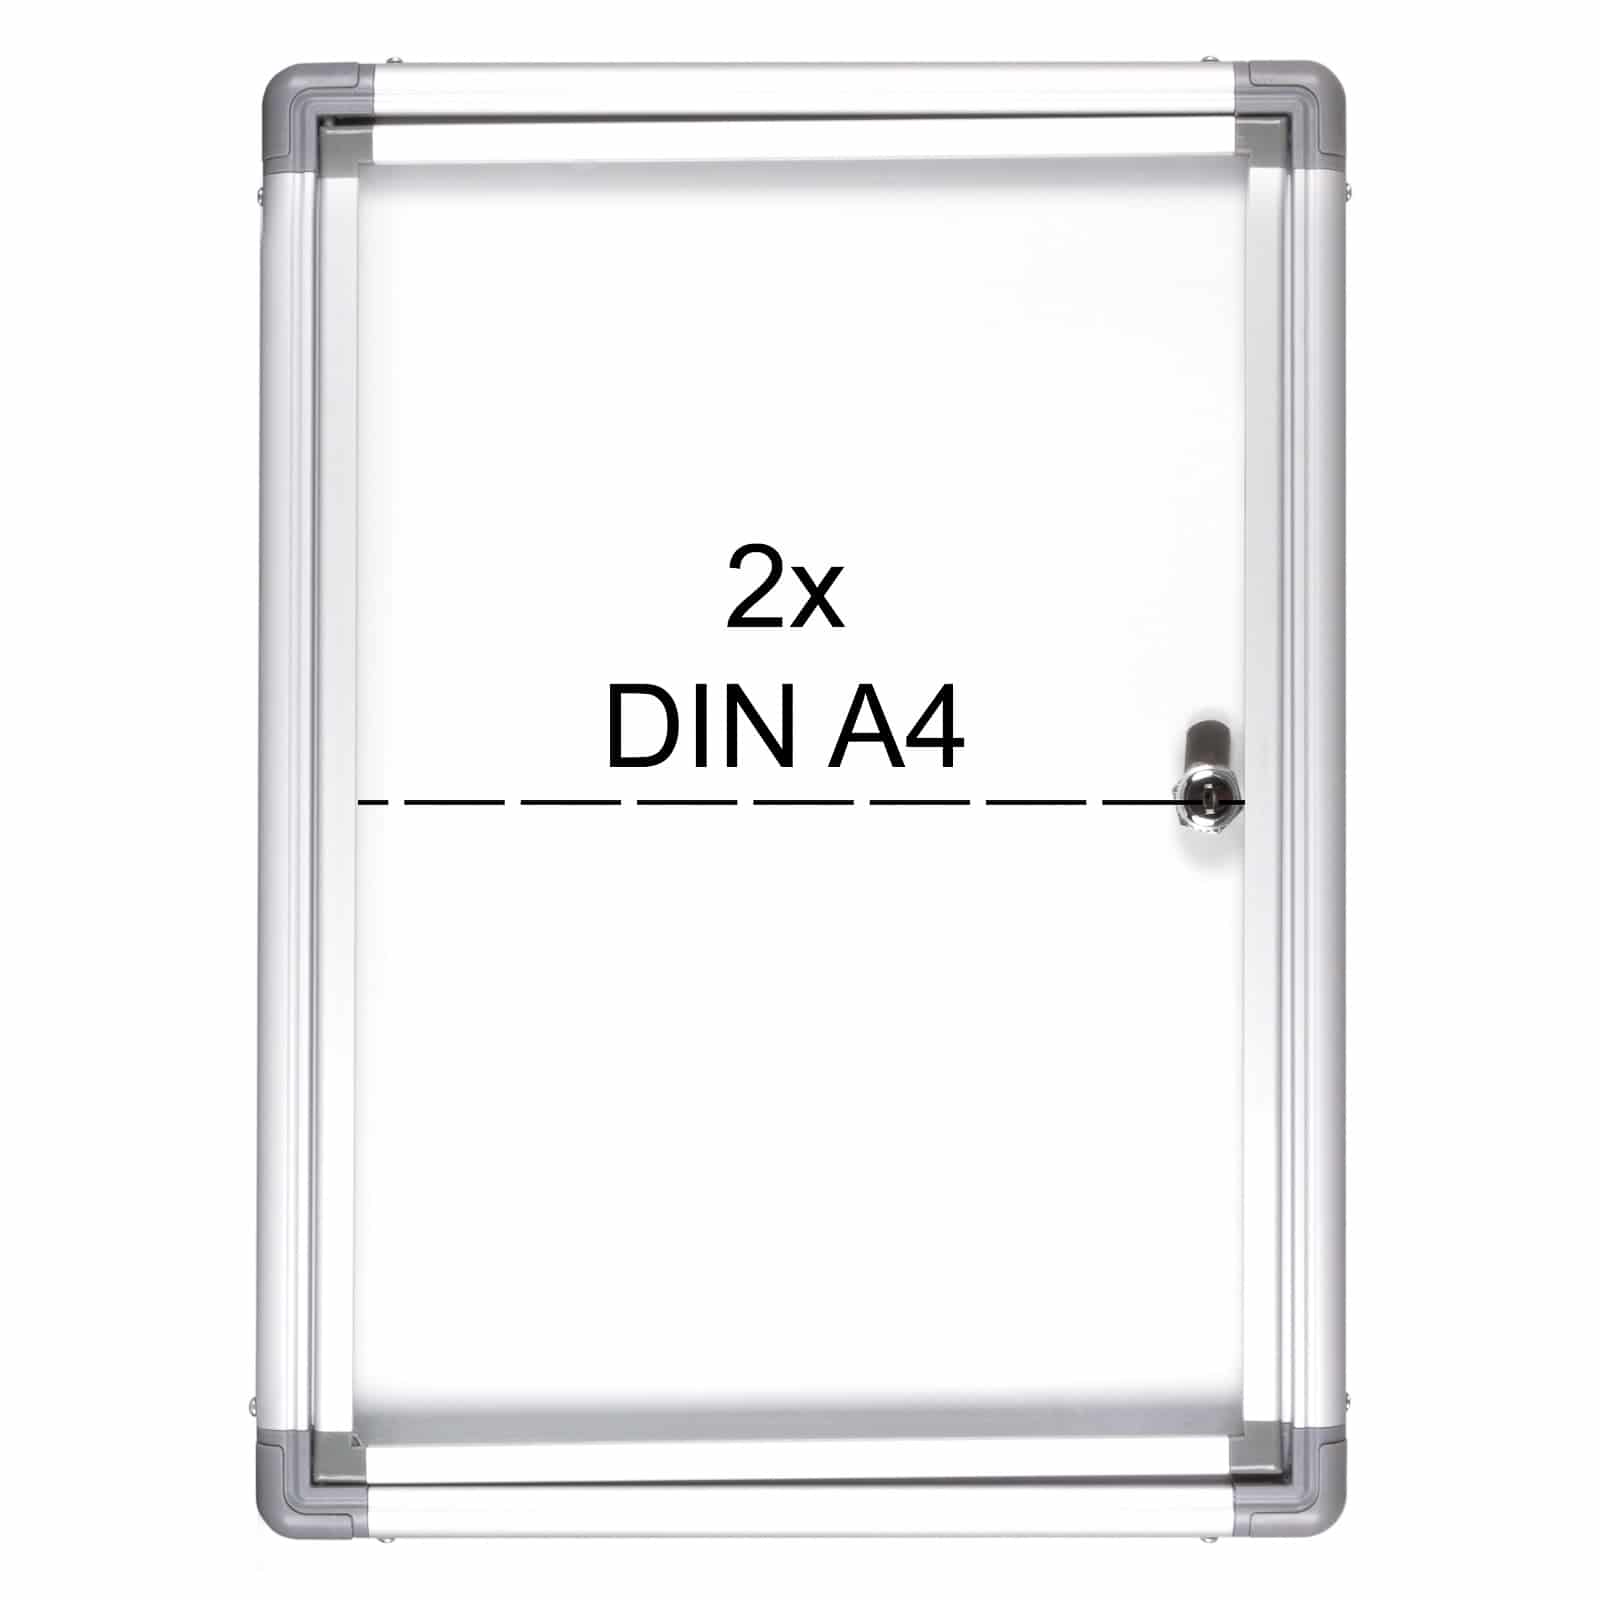 BuroMi Binnenvitrine / Mededelingenbord 2 Din A4 - incl. 8 magneten